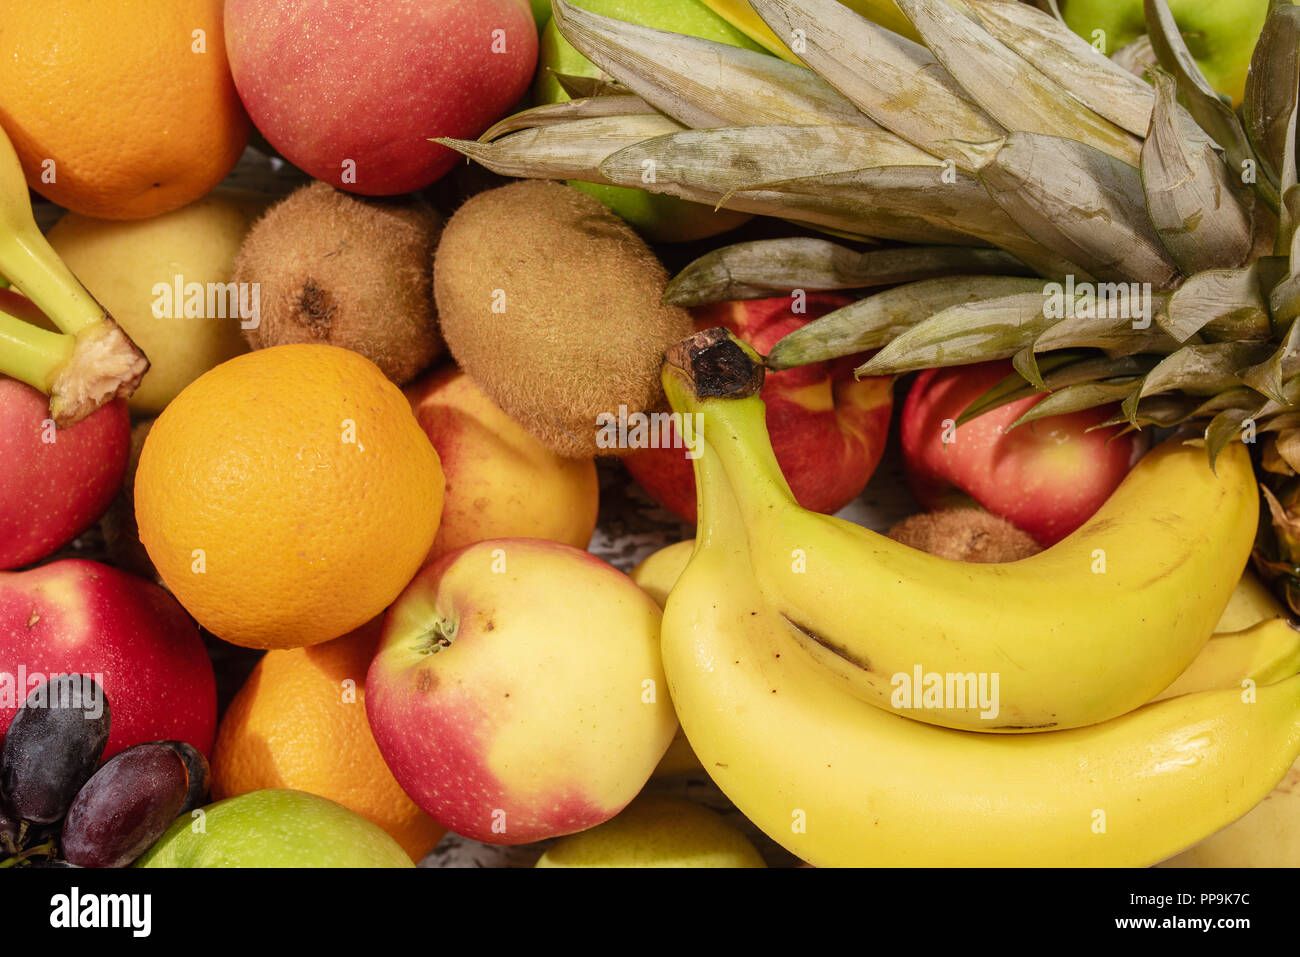 Contexte de différents fruits exotiques.Banana,kiwi,orange. Banque D'Images